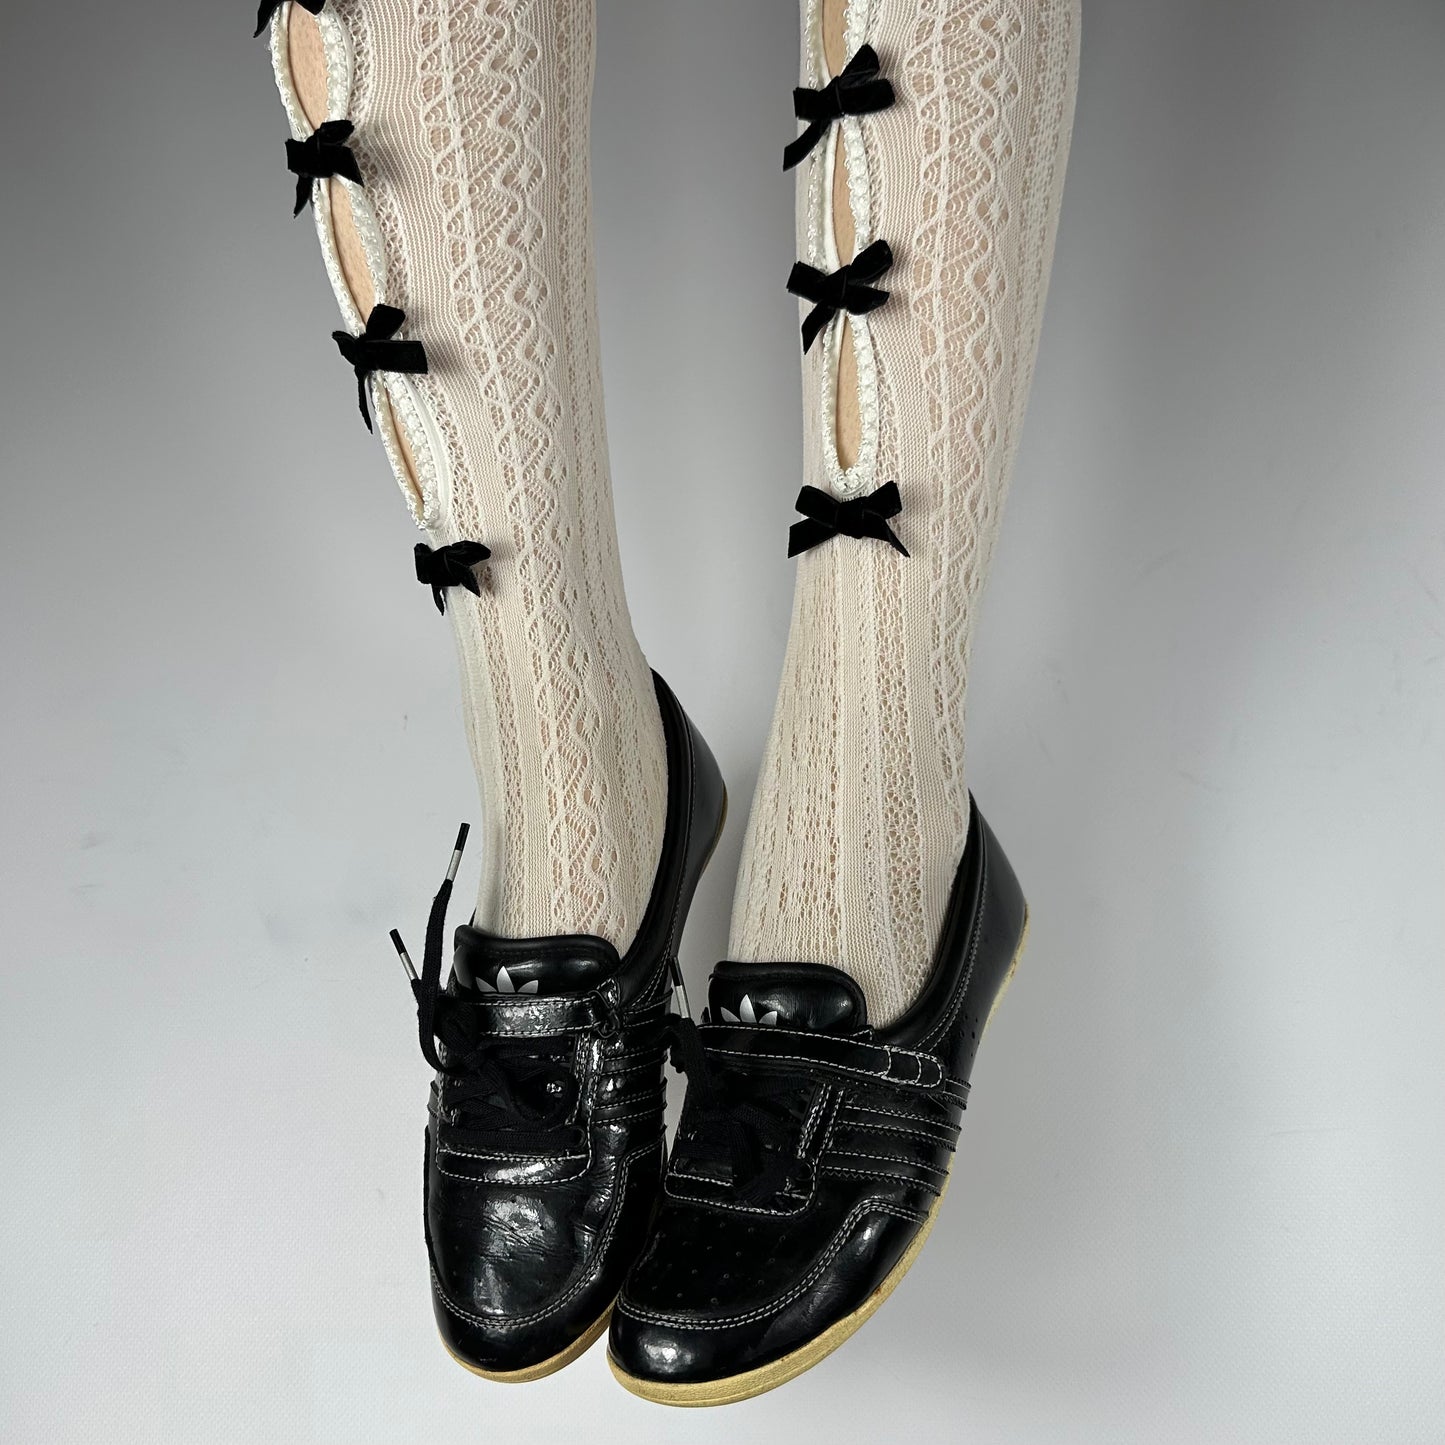 Adidas Vintage Ballet Flats 37/38